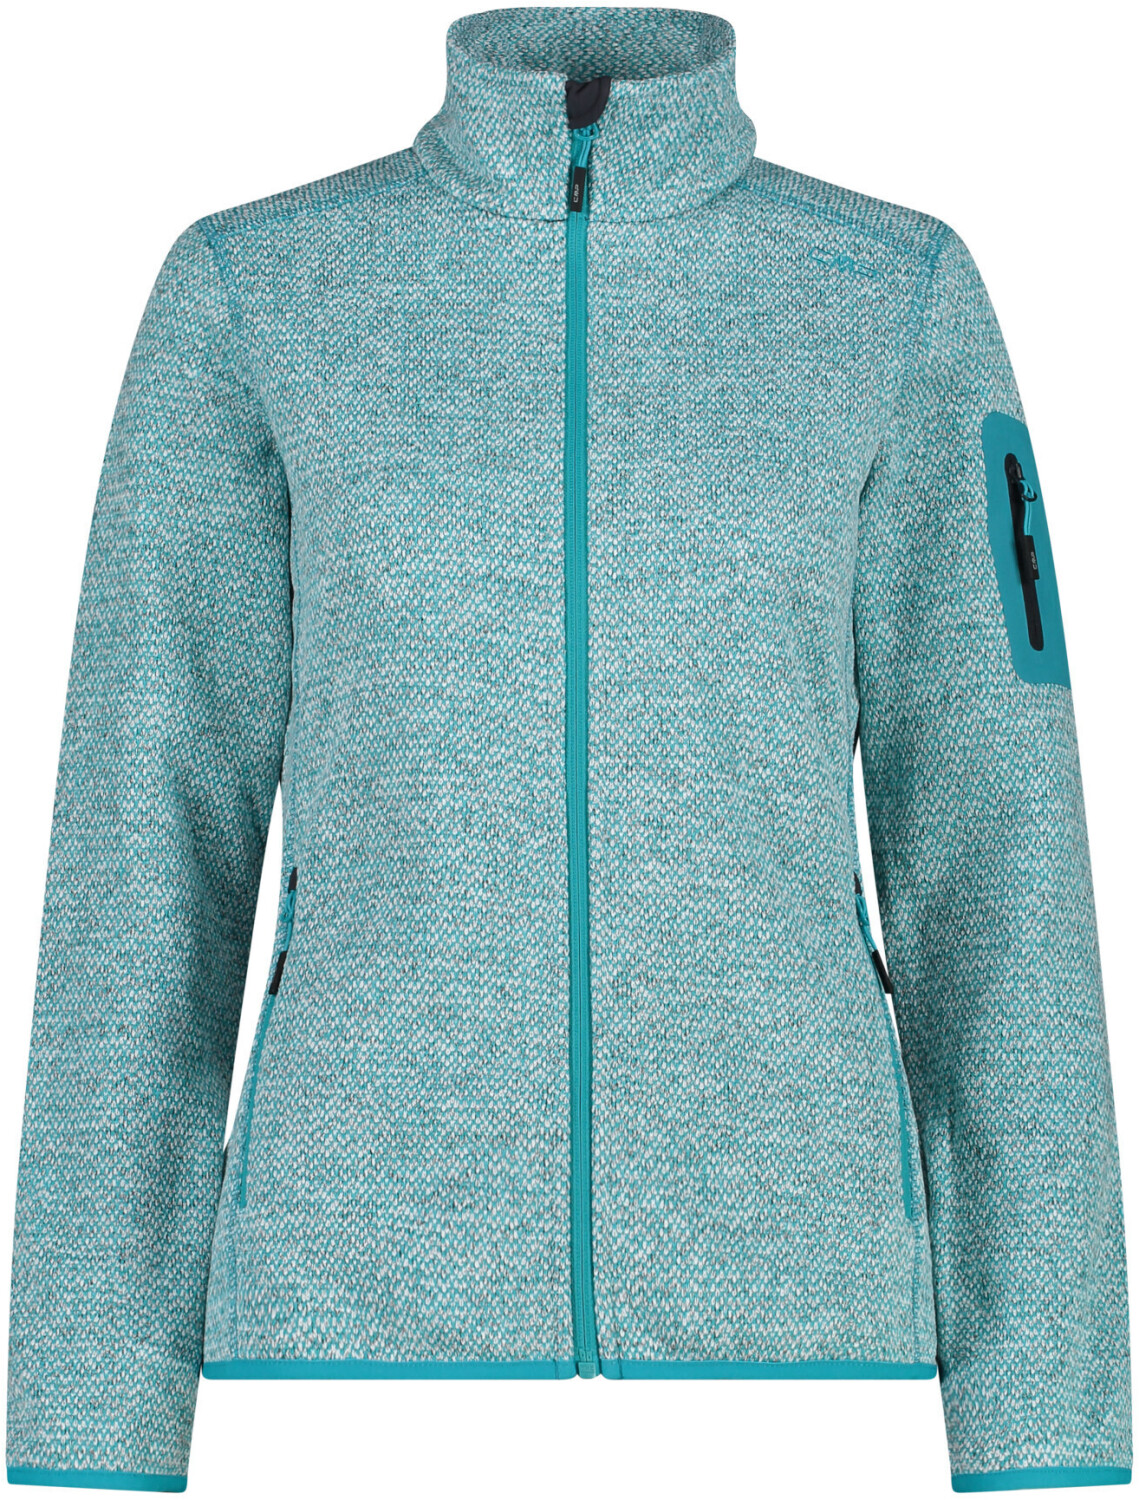 (Today) £28.99 from Fleece – Best on Deals CMP Woman Jacket Buy lagoon/bianco (3H14746)